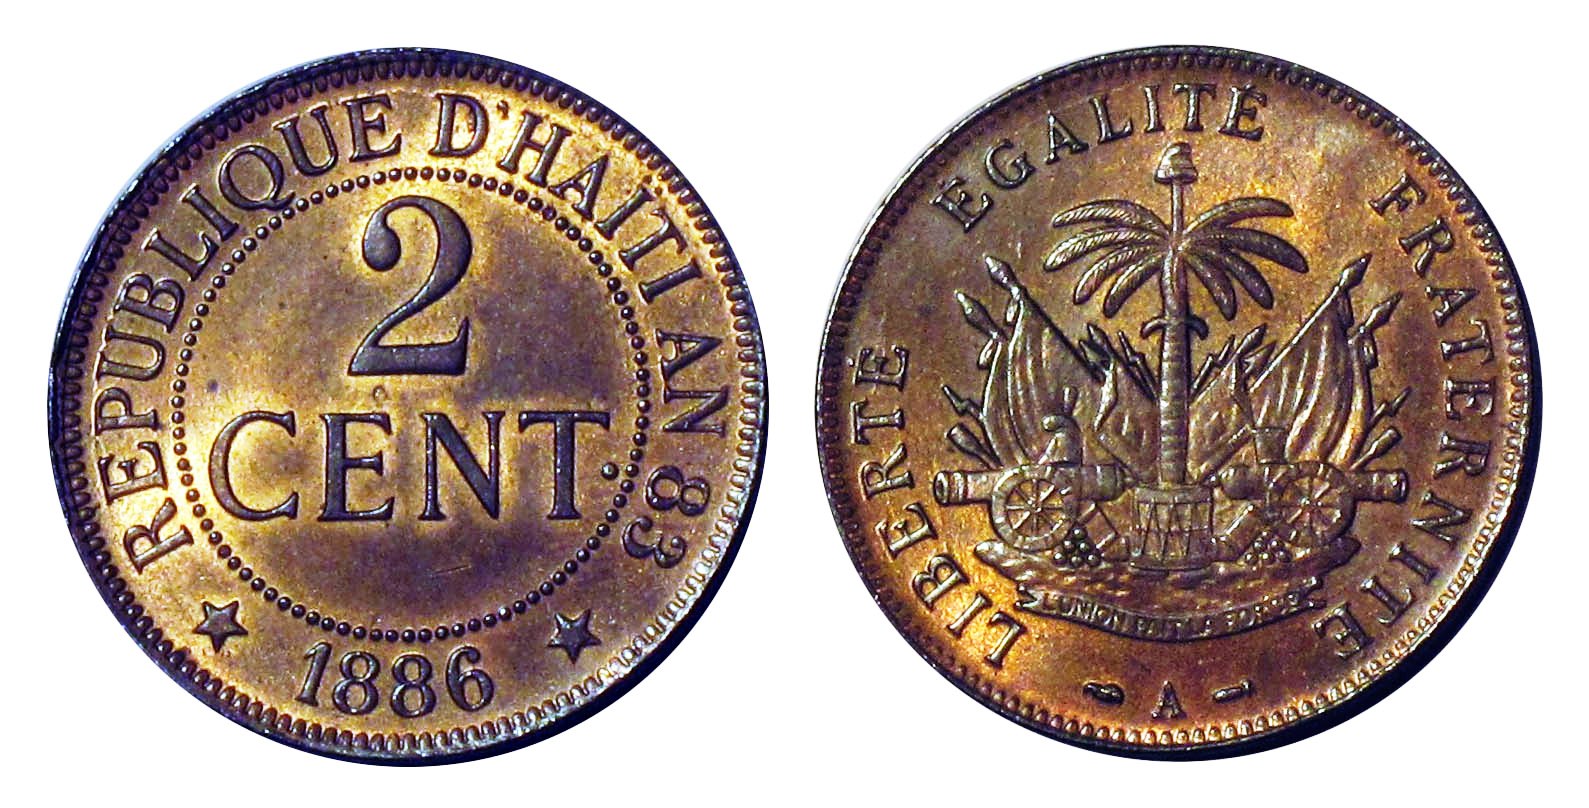 Haiti 1886 2 Cent Collage B.jpg